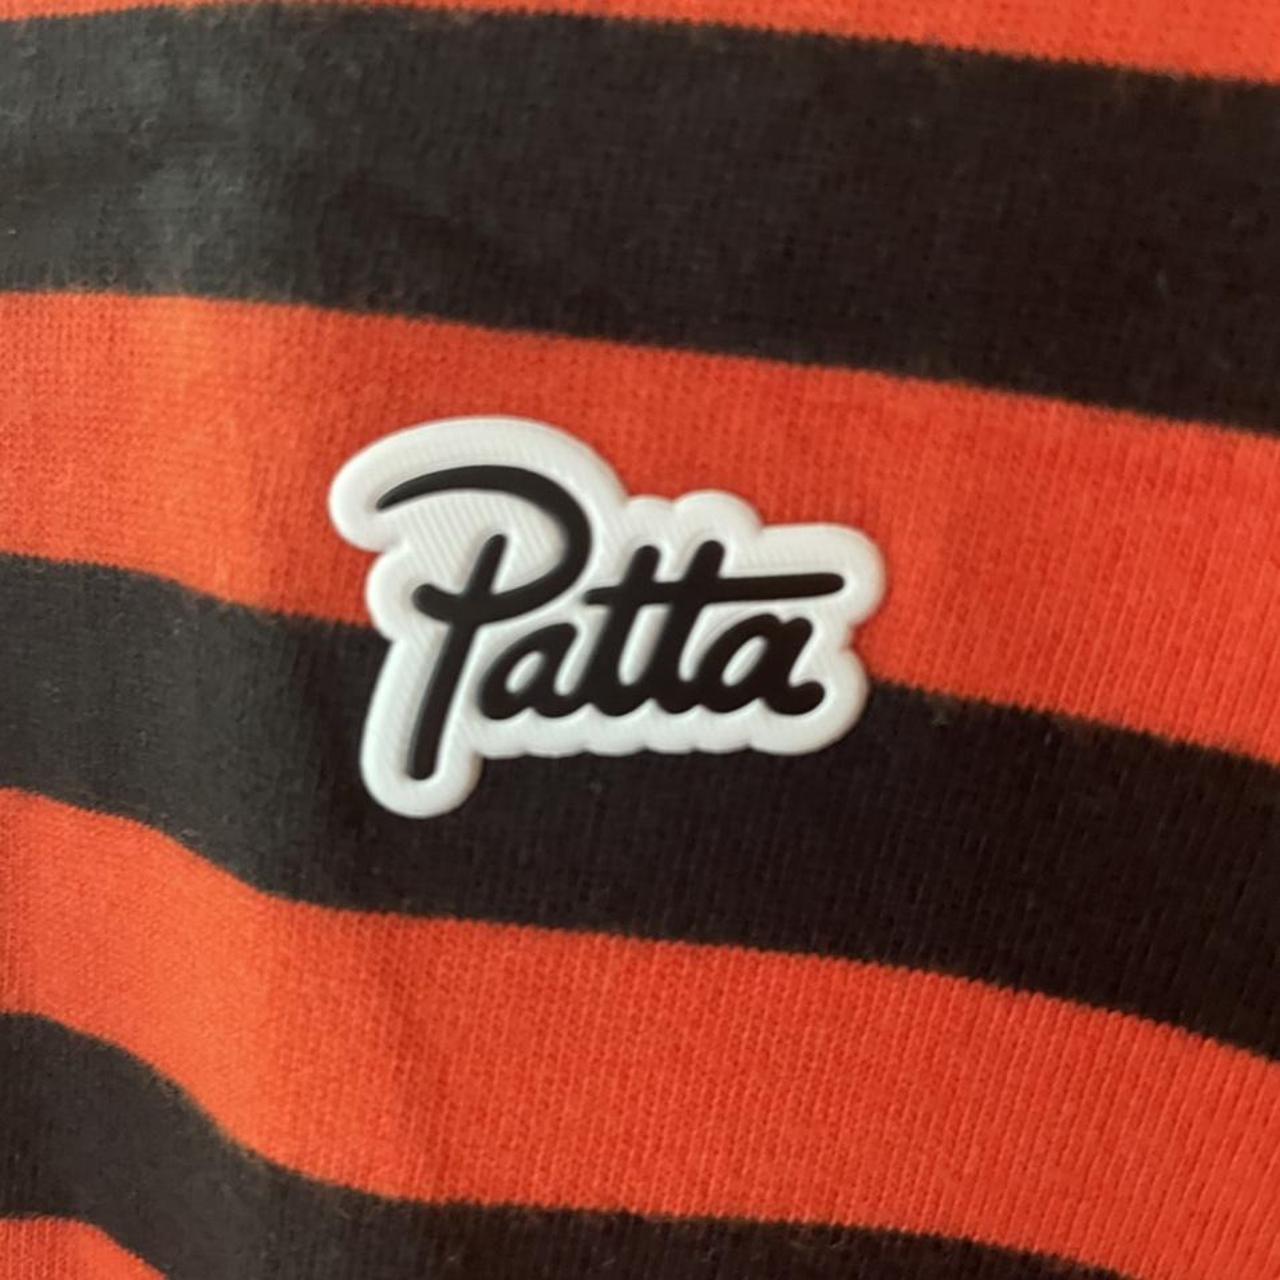 Patta Men's Orange and Black T-shirt (2)